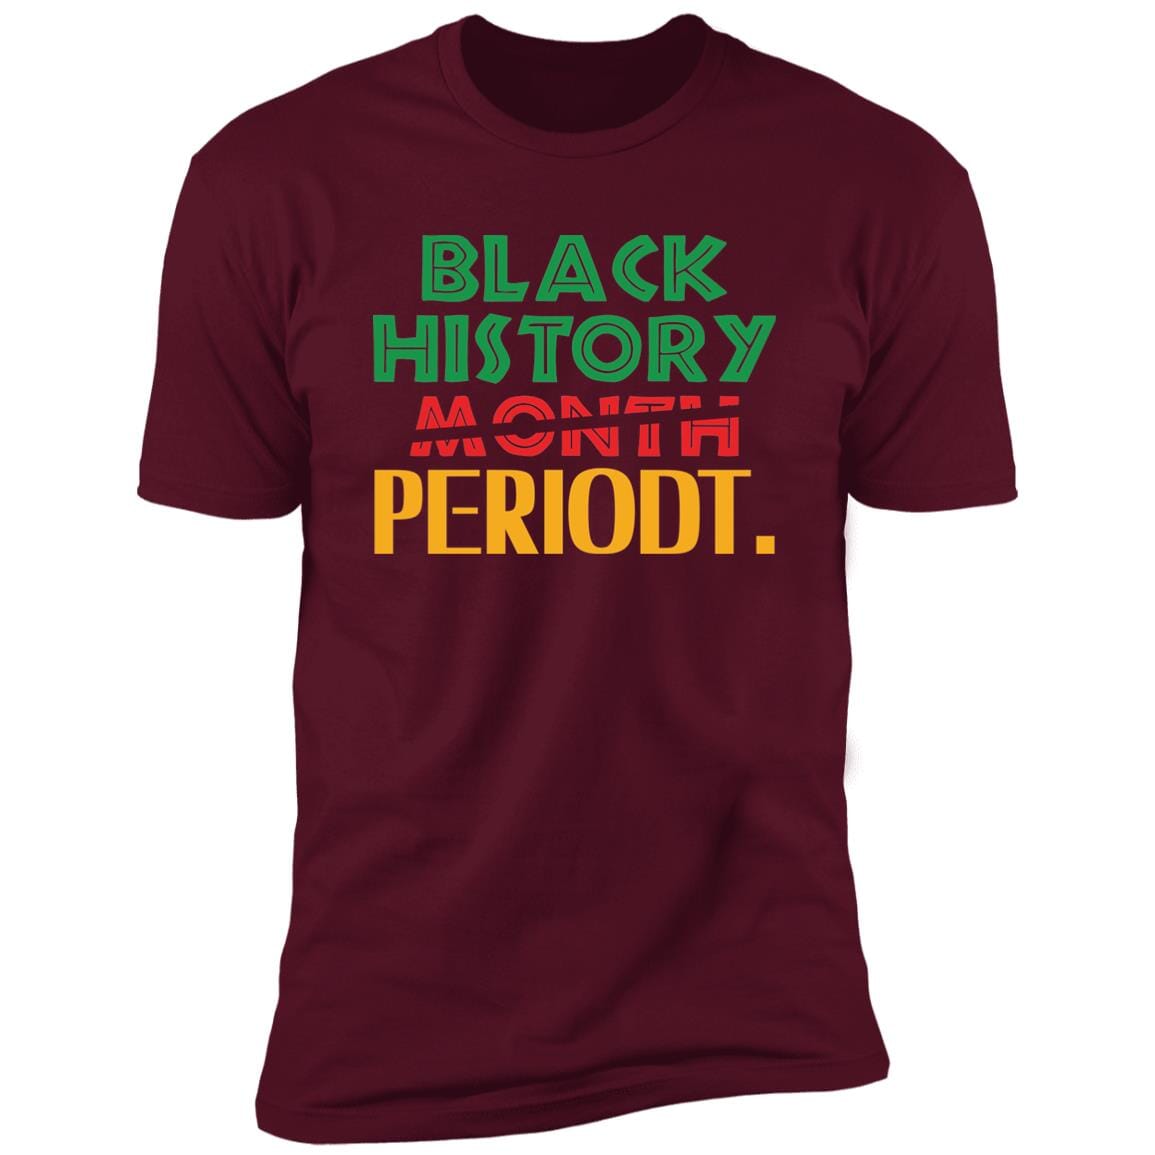 Black History Month Periodt. T-shirt Apparel Gearment Premium T-Shirt Maroon X-Small